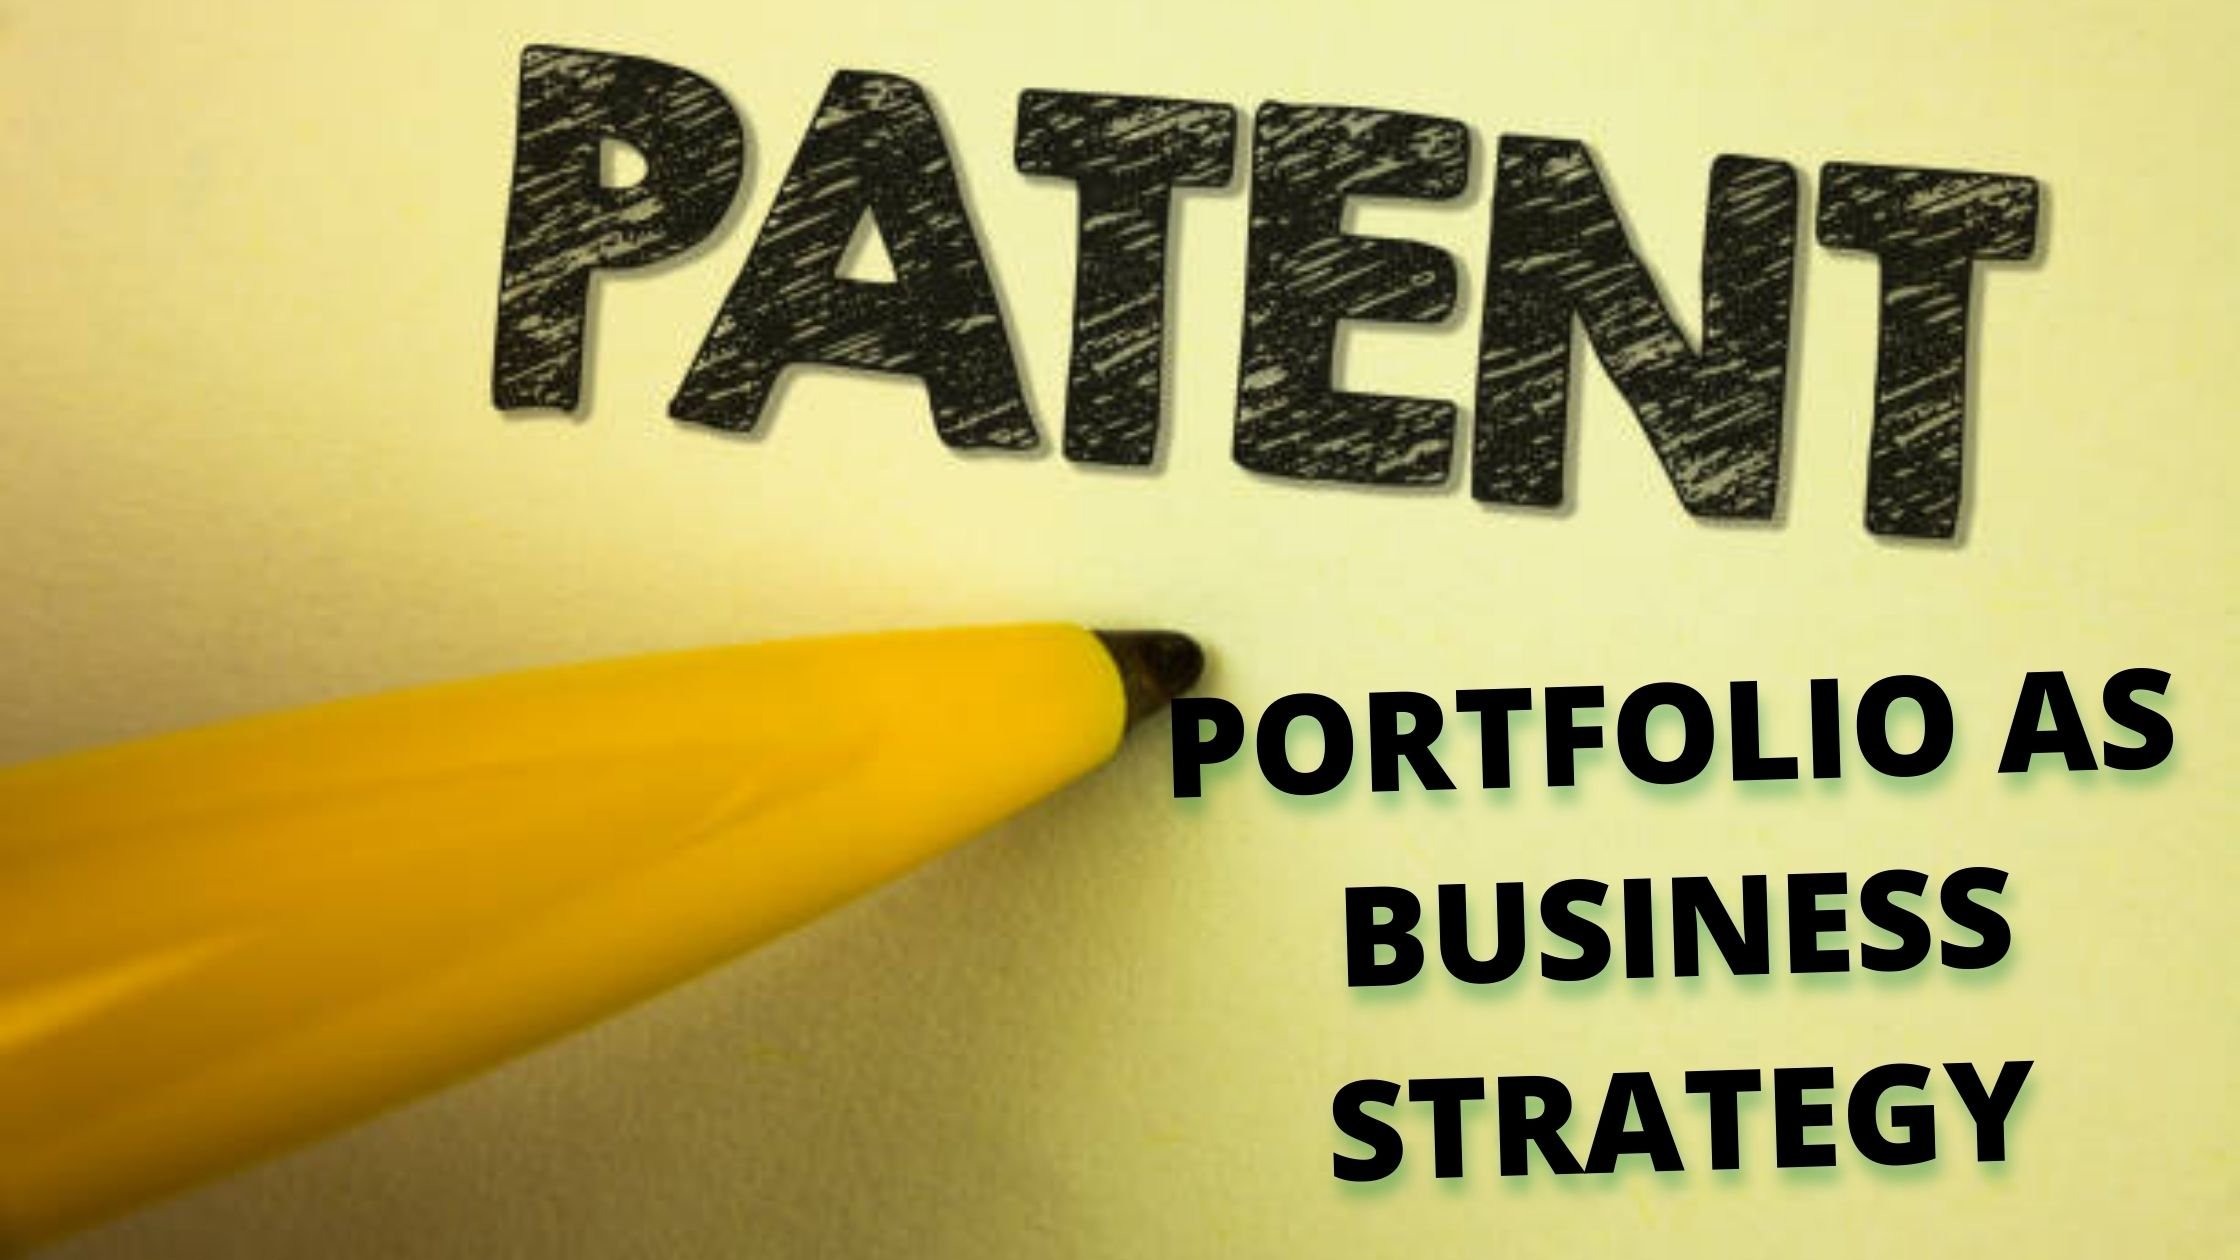 Patent Portfolio as Business Strategy